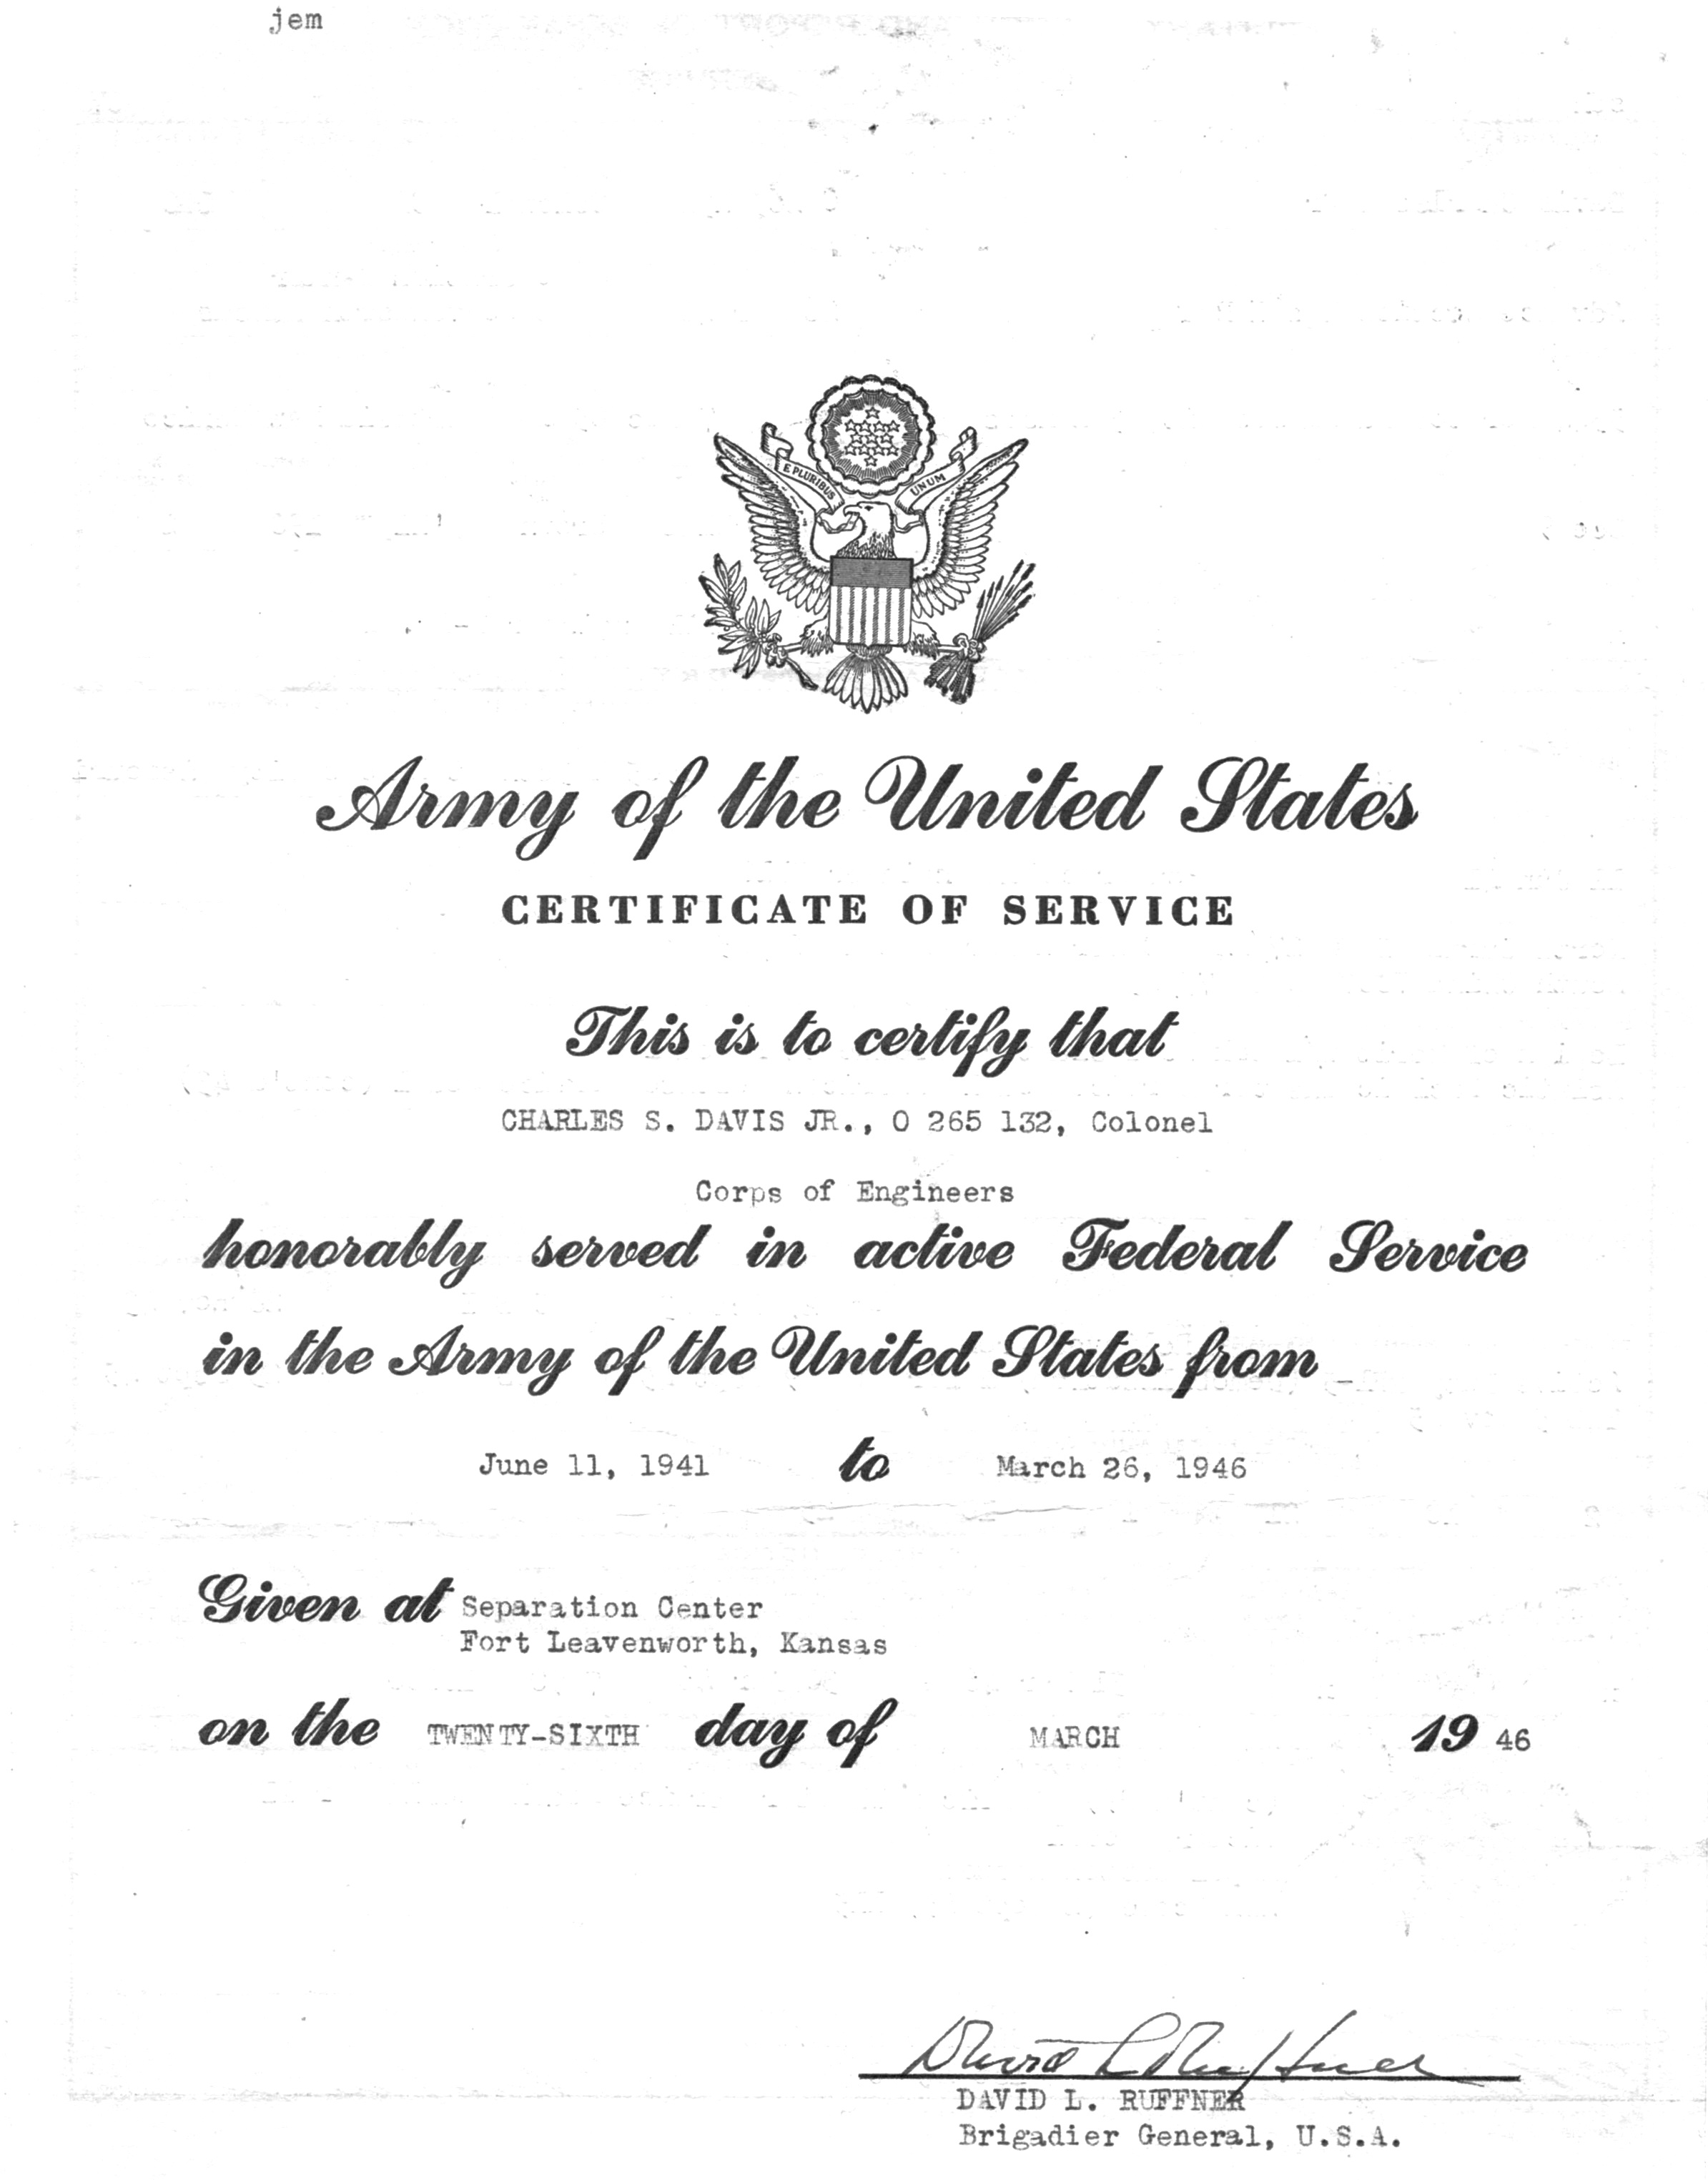  Charles S. Davis document 